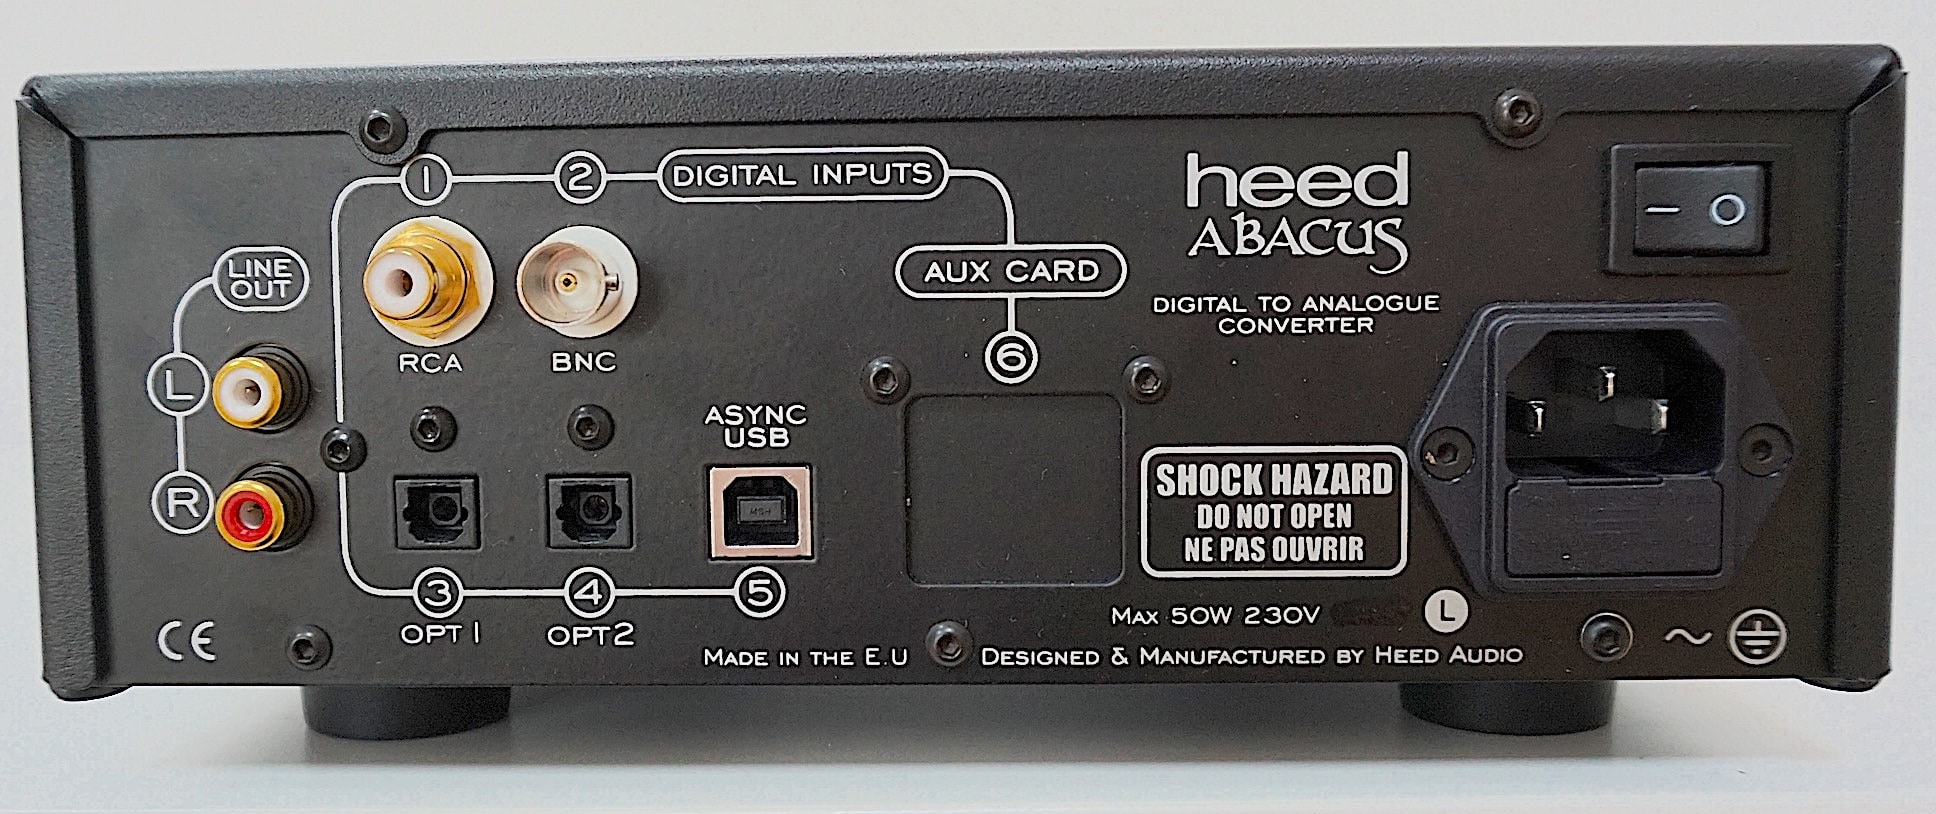 Abacus DAC From Heed: The Digital Gentleman